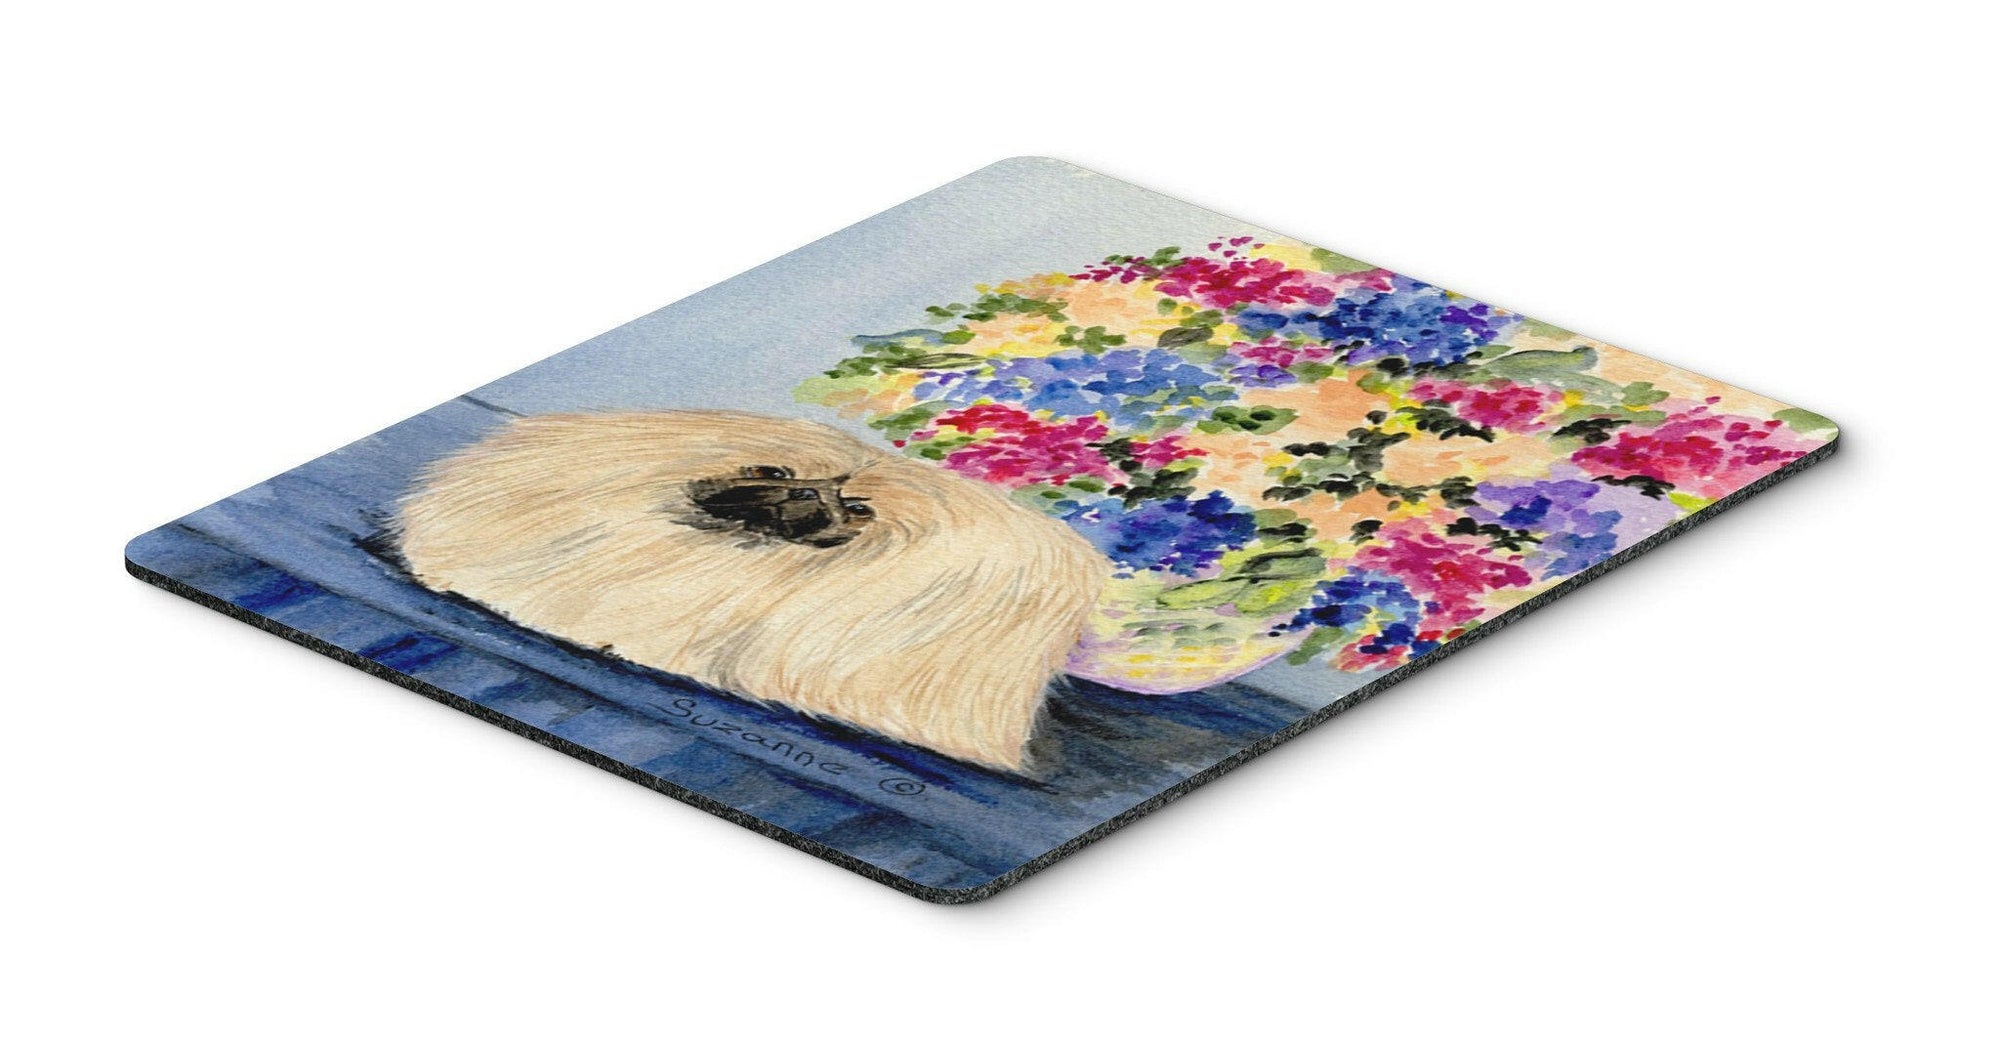 Pekingese Mouse Pad / Hot Pad / Trivet by Caroline's Treasures